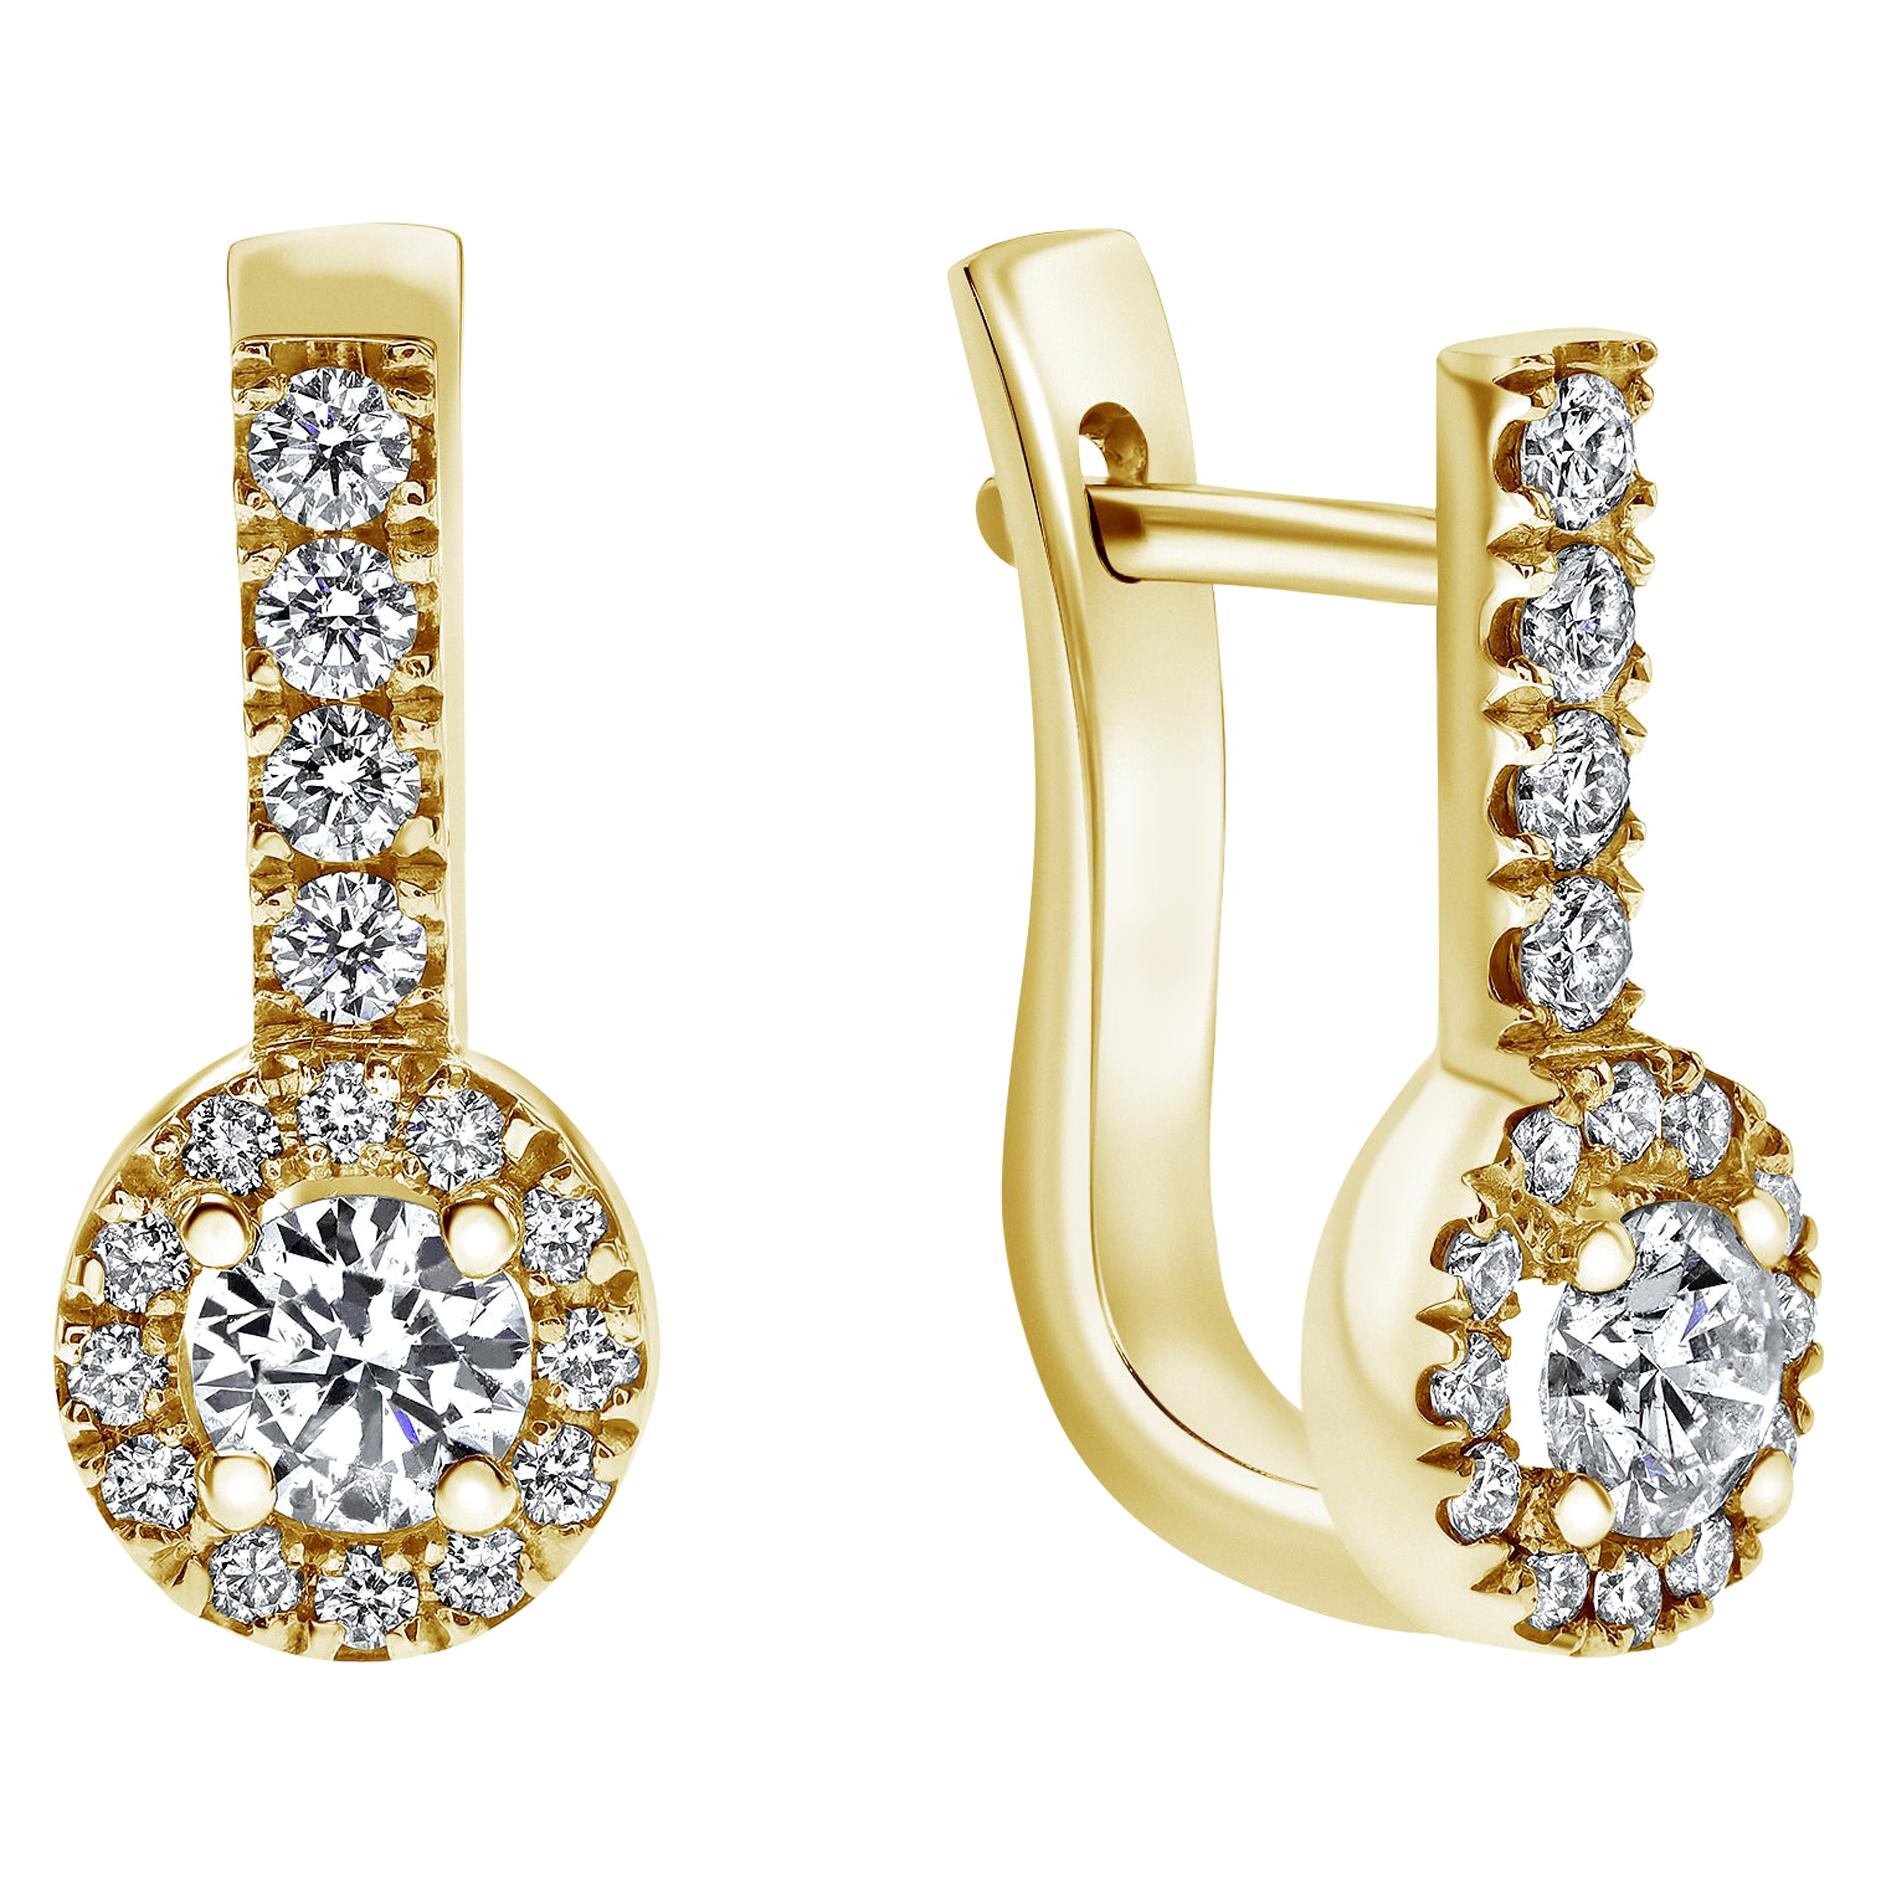 1.10 Carat Edison Diamond Earrings in 14 Karat Yellow Gold, Shlomit Rogel